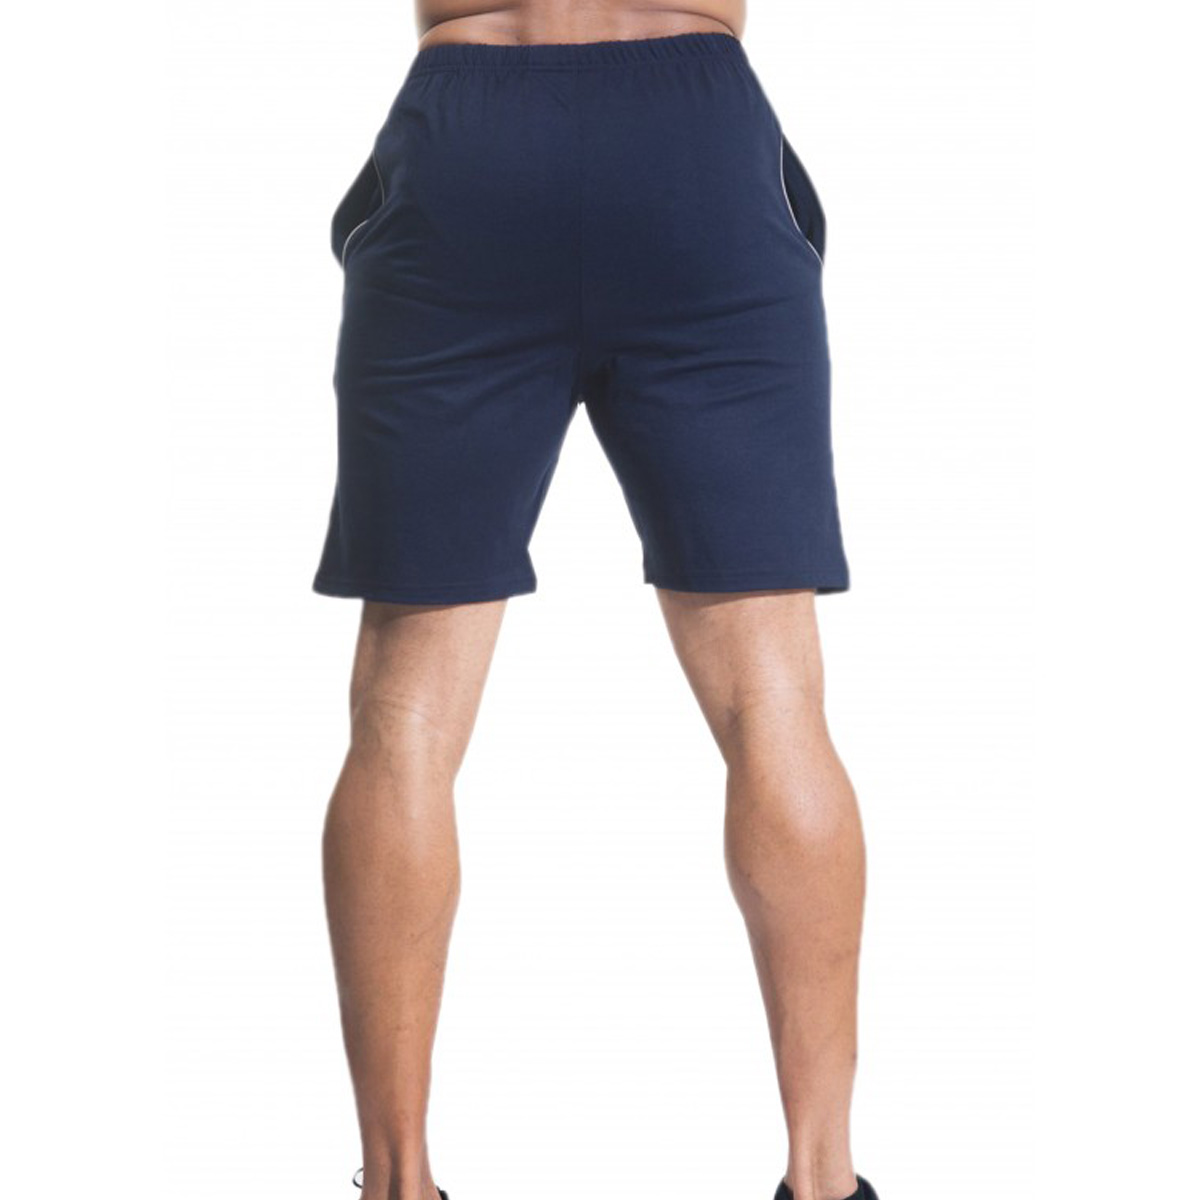 Shorts esportivos masculinos personalizados'